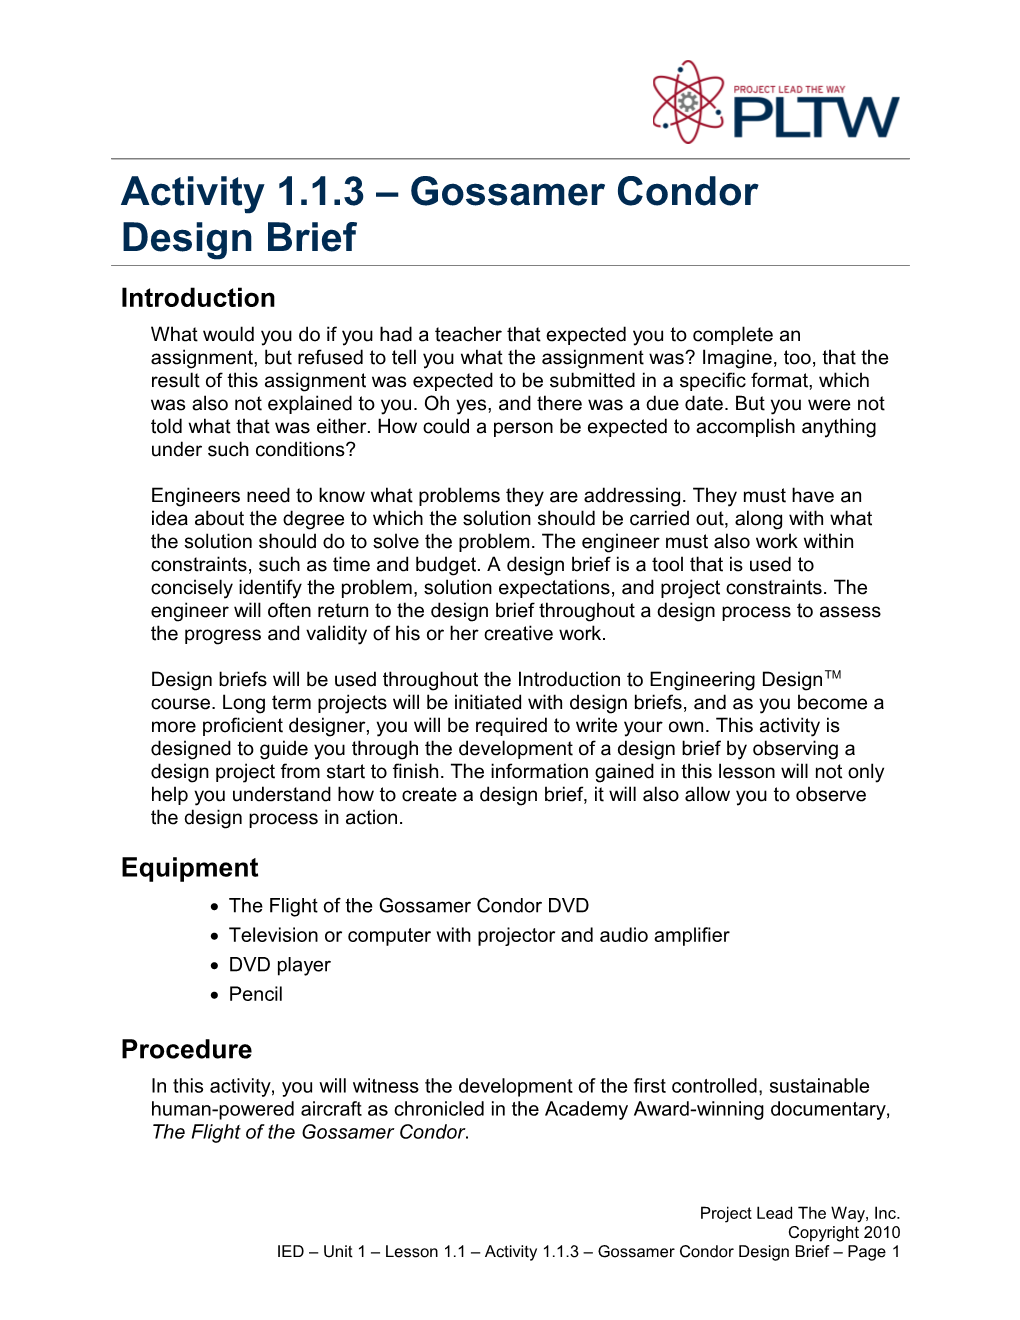 Activity 1.1.3:Gossamer Condor Design Brief